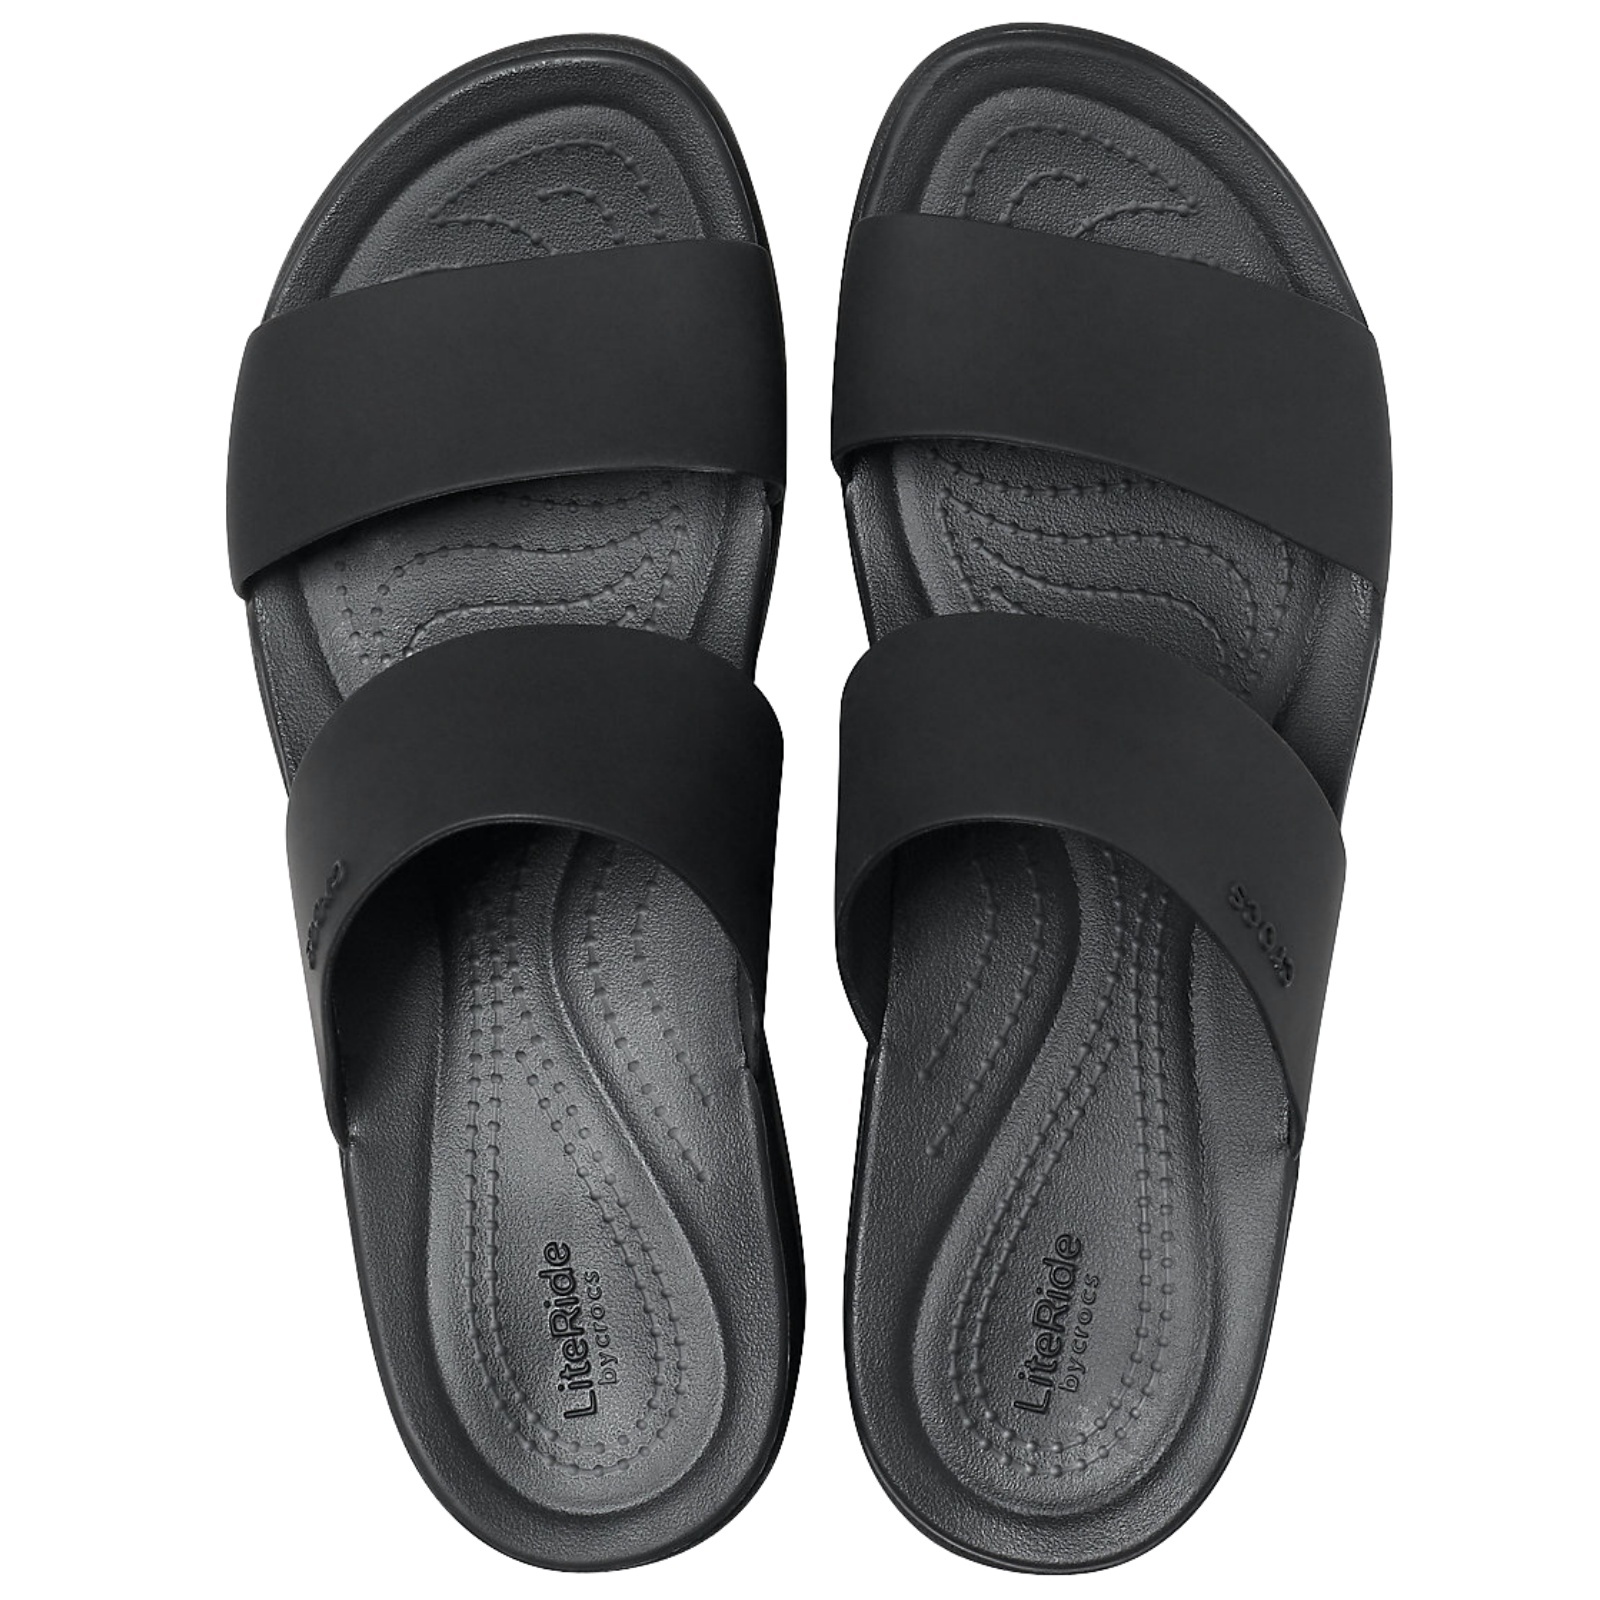 Crocs Brooklyn Mid Wedge Women's Shoes Wedges Heel Sandals LiteRide ...